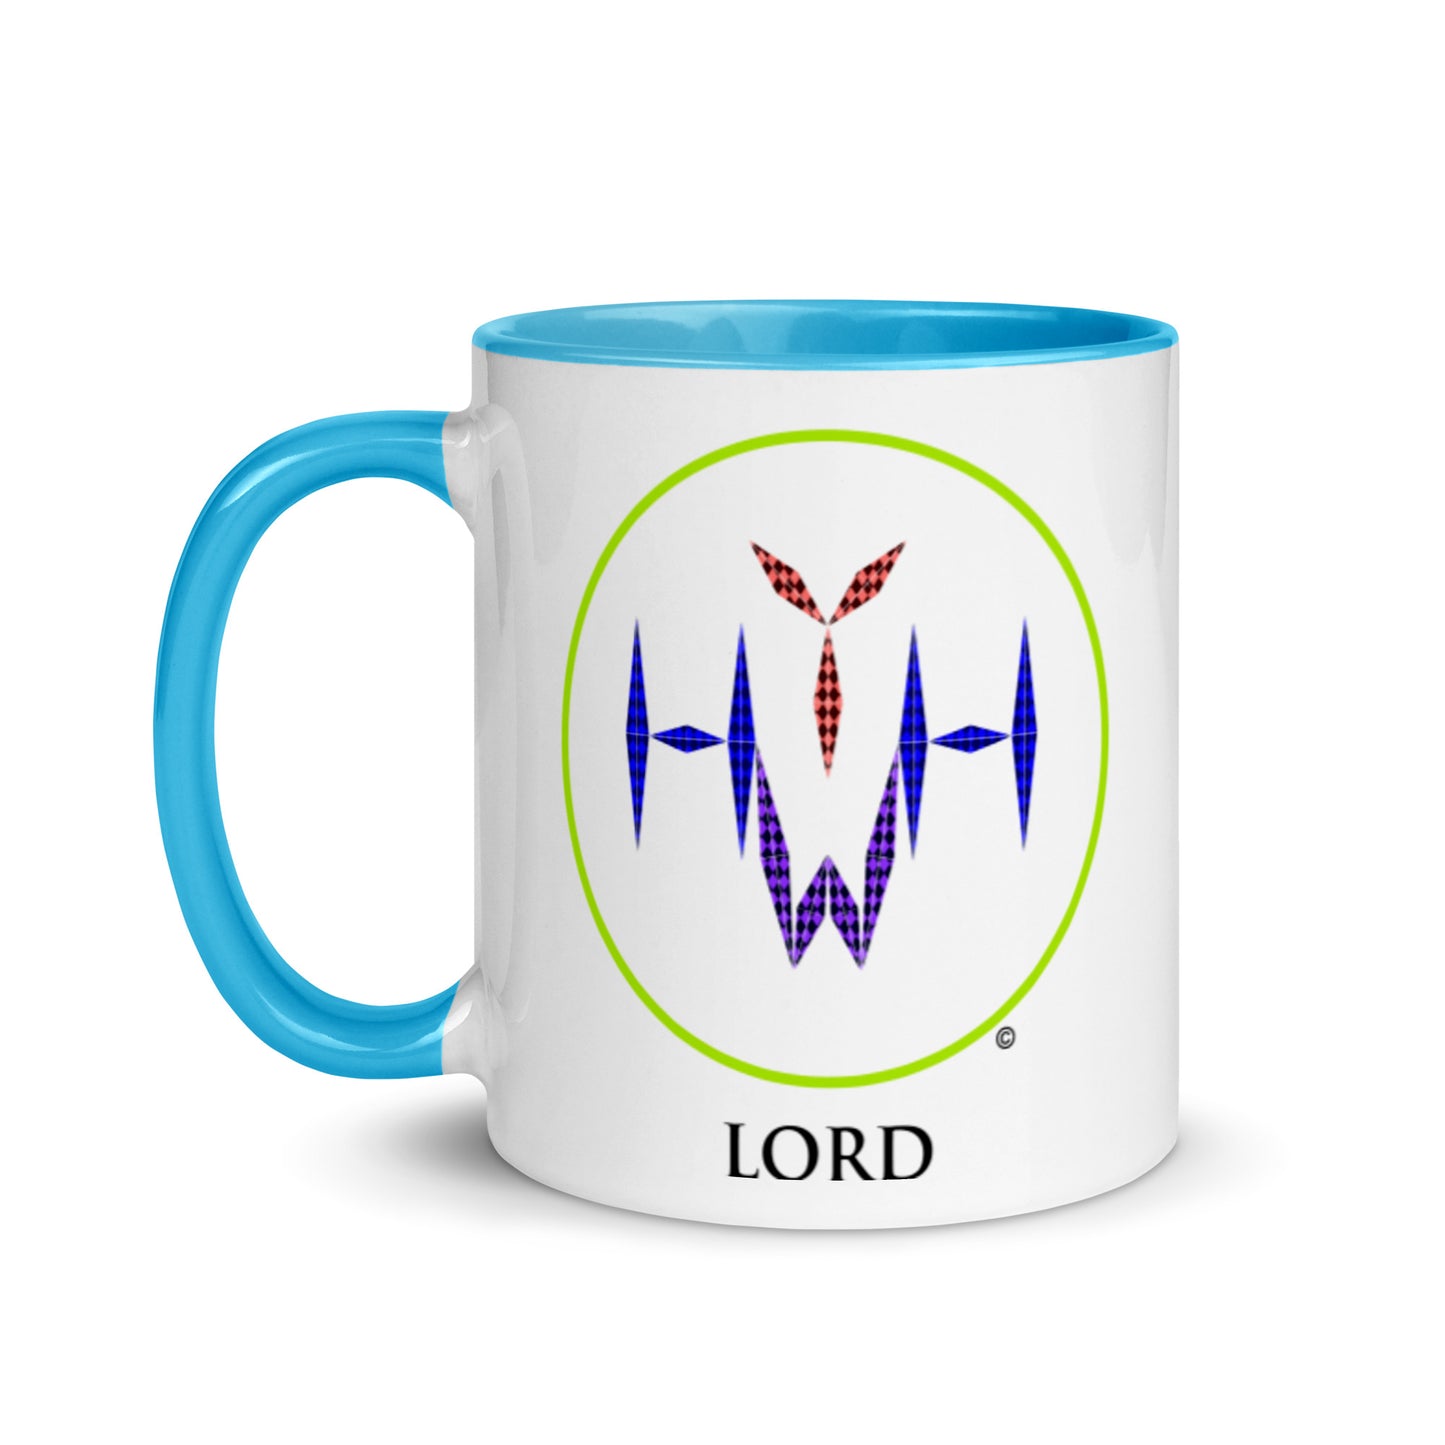 Lord Mug with Color Inside